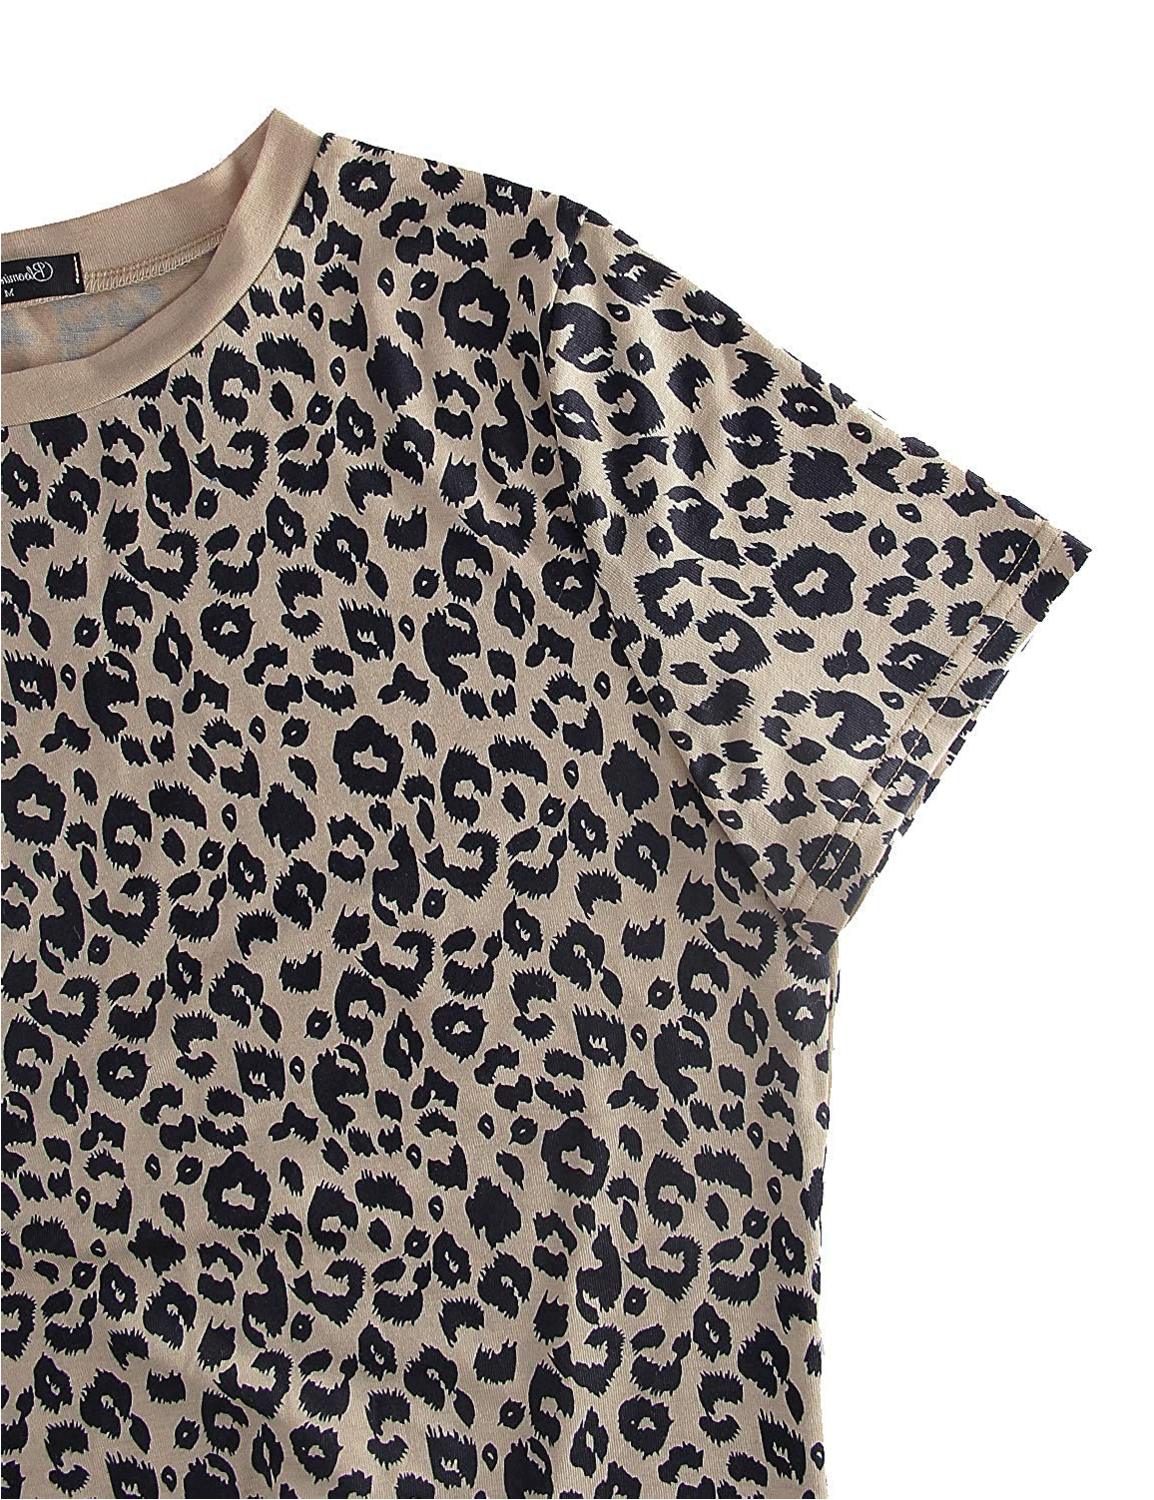 BMJL Women's Casual Cute Shirts Leopard Print Tops, Leopard01, Size X ...